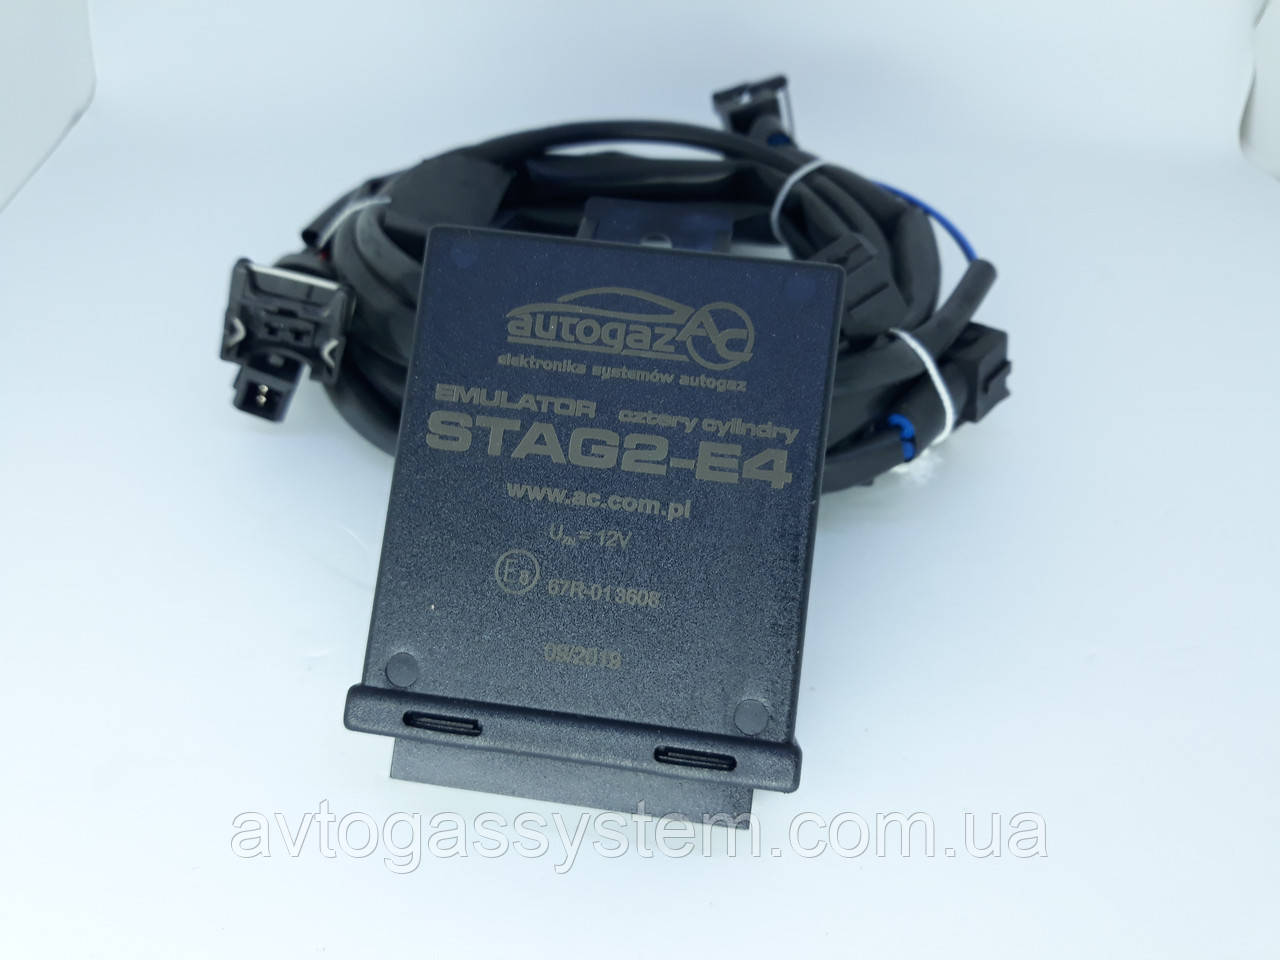 Емулятор форсунок Stag2-E4 з роз'єктами Europa/Bosch 4 циліндри